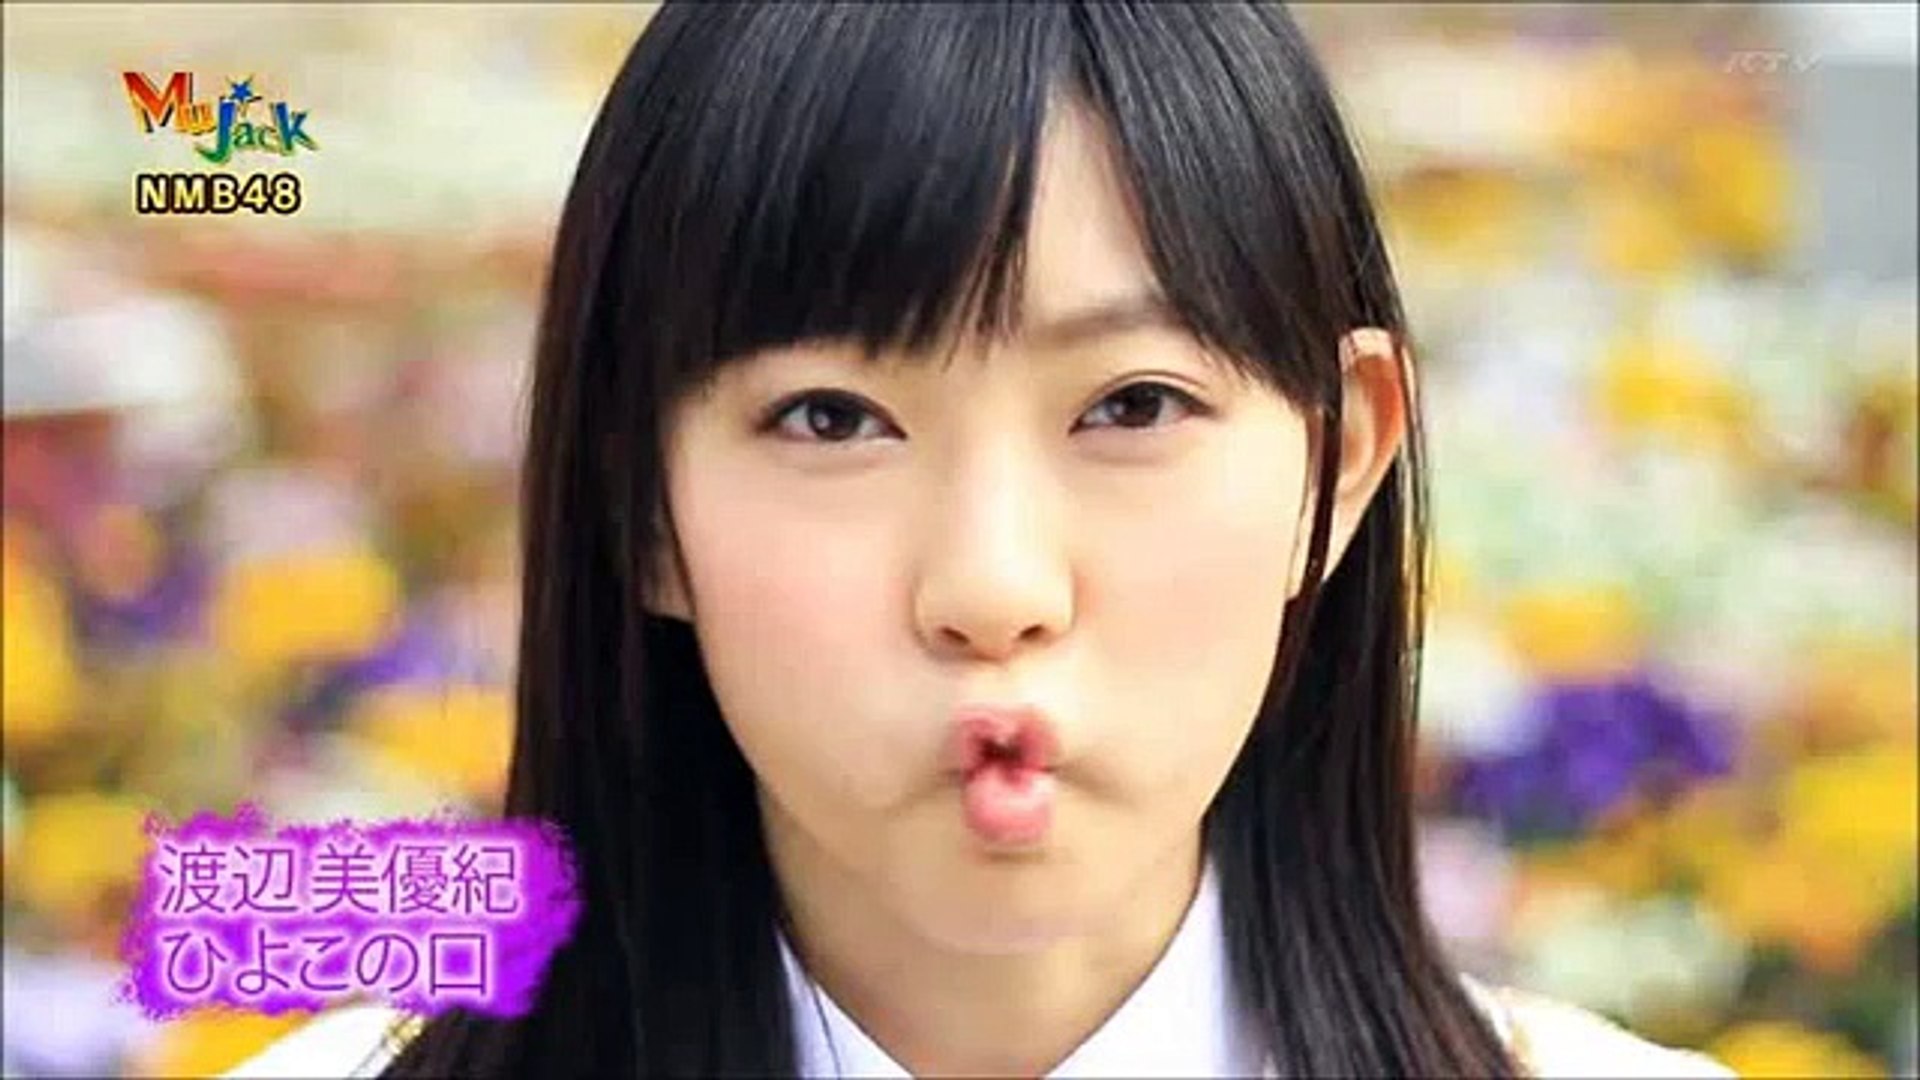 Nmb48 渡辺美優紀 みるきー最近まーちゅんとよくキスする 小笠原茉由 Video Dailymotion